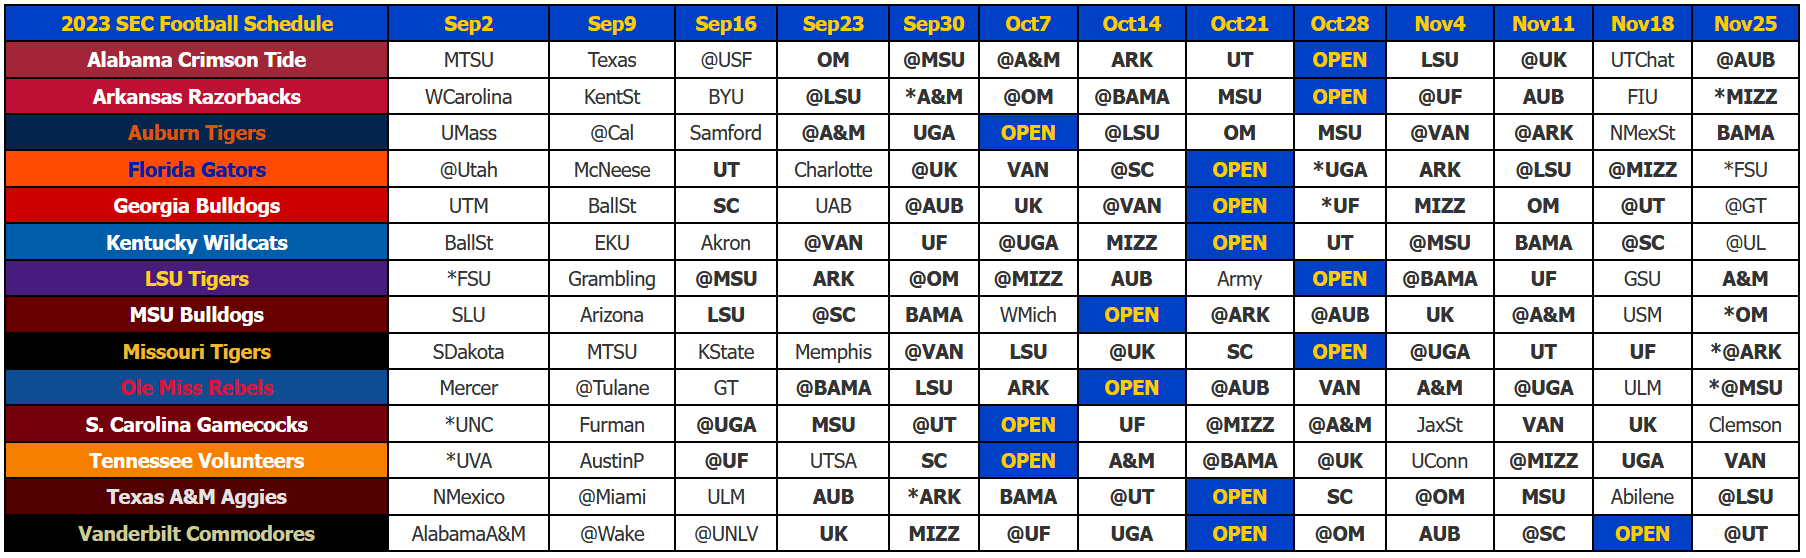 2023 SEC Football Schedule